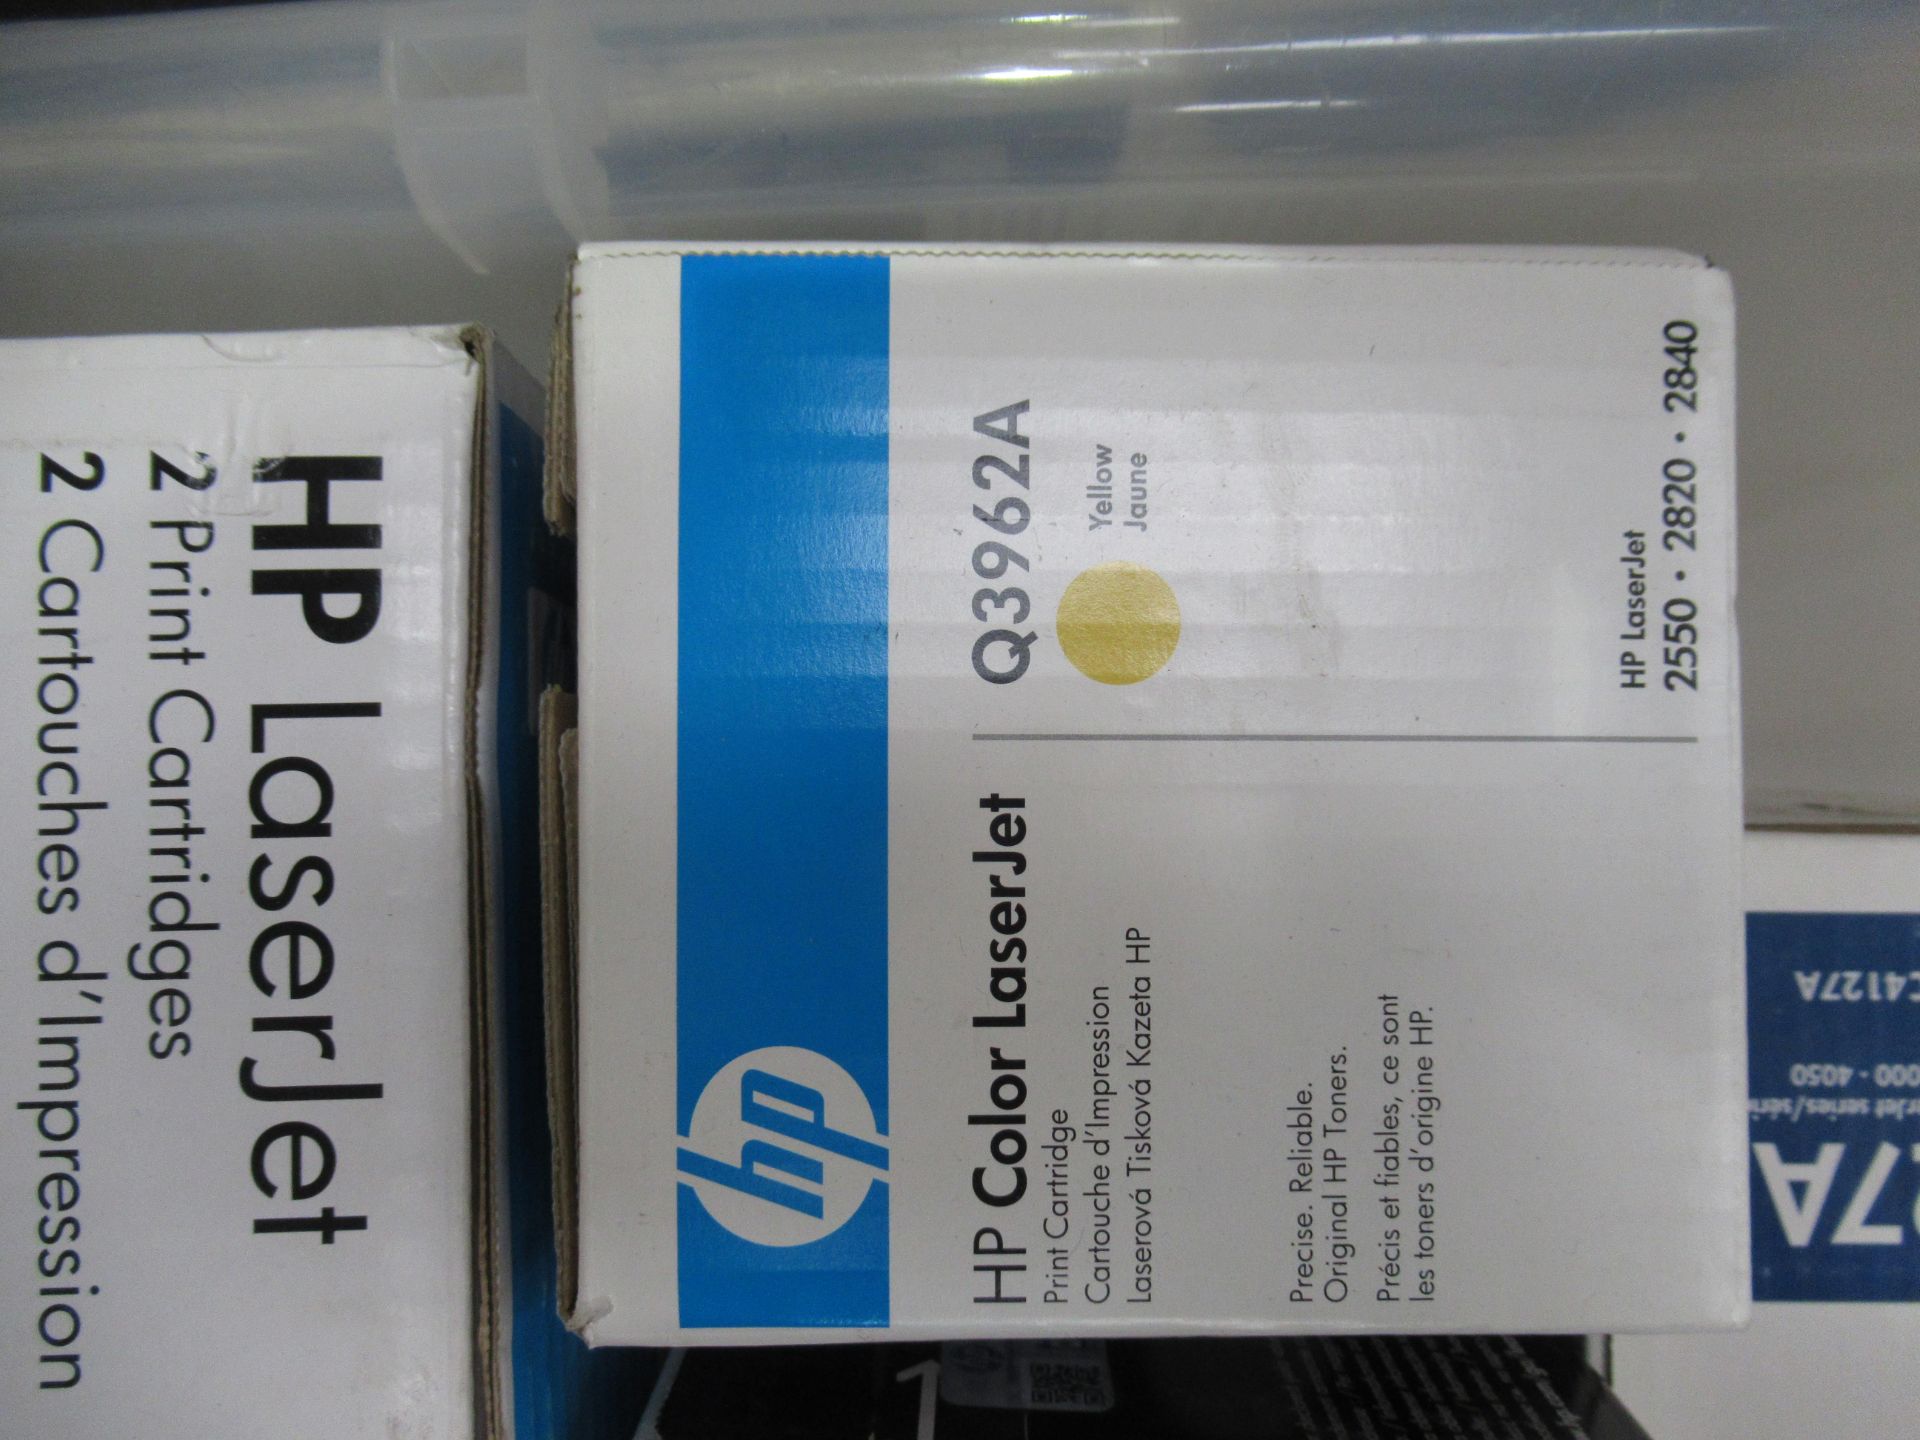 4 various HP LaserJet ink cartridges to crate with HP LaserJet 5500 image transfer kit - Image 4 of 7